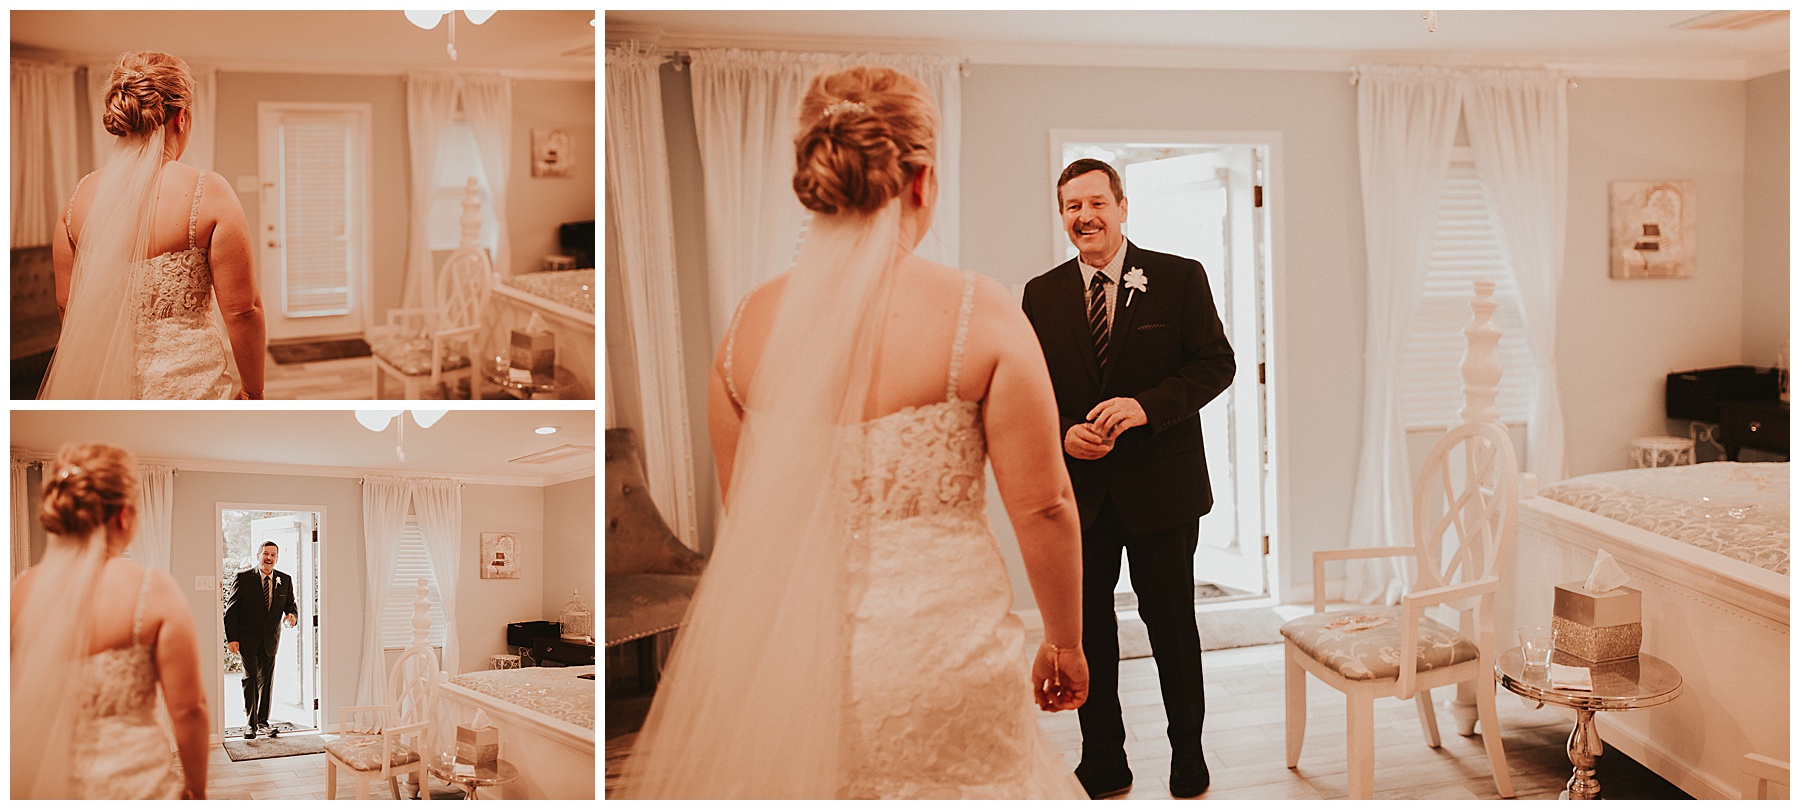 Bride getting ready | Juju Photography - Florida, San Francisco & Destination wedding photographer 